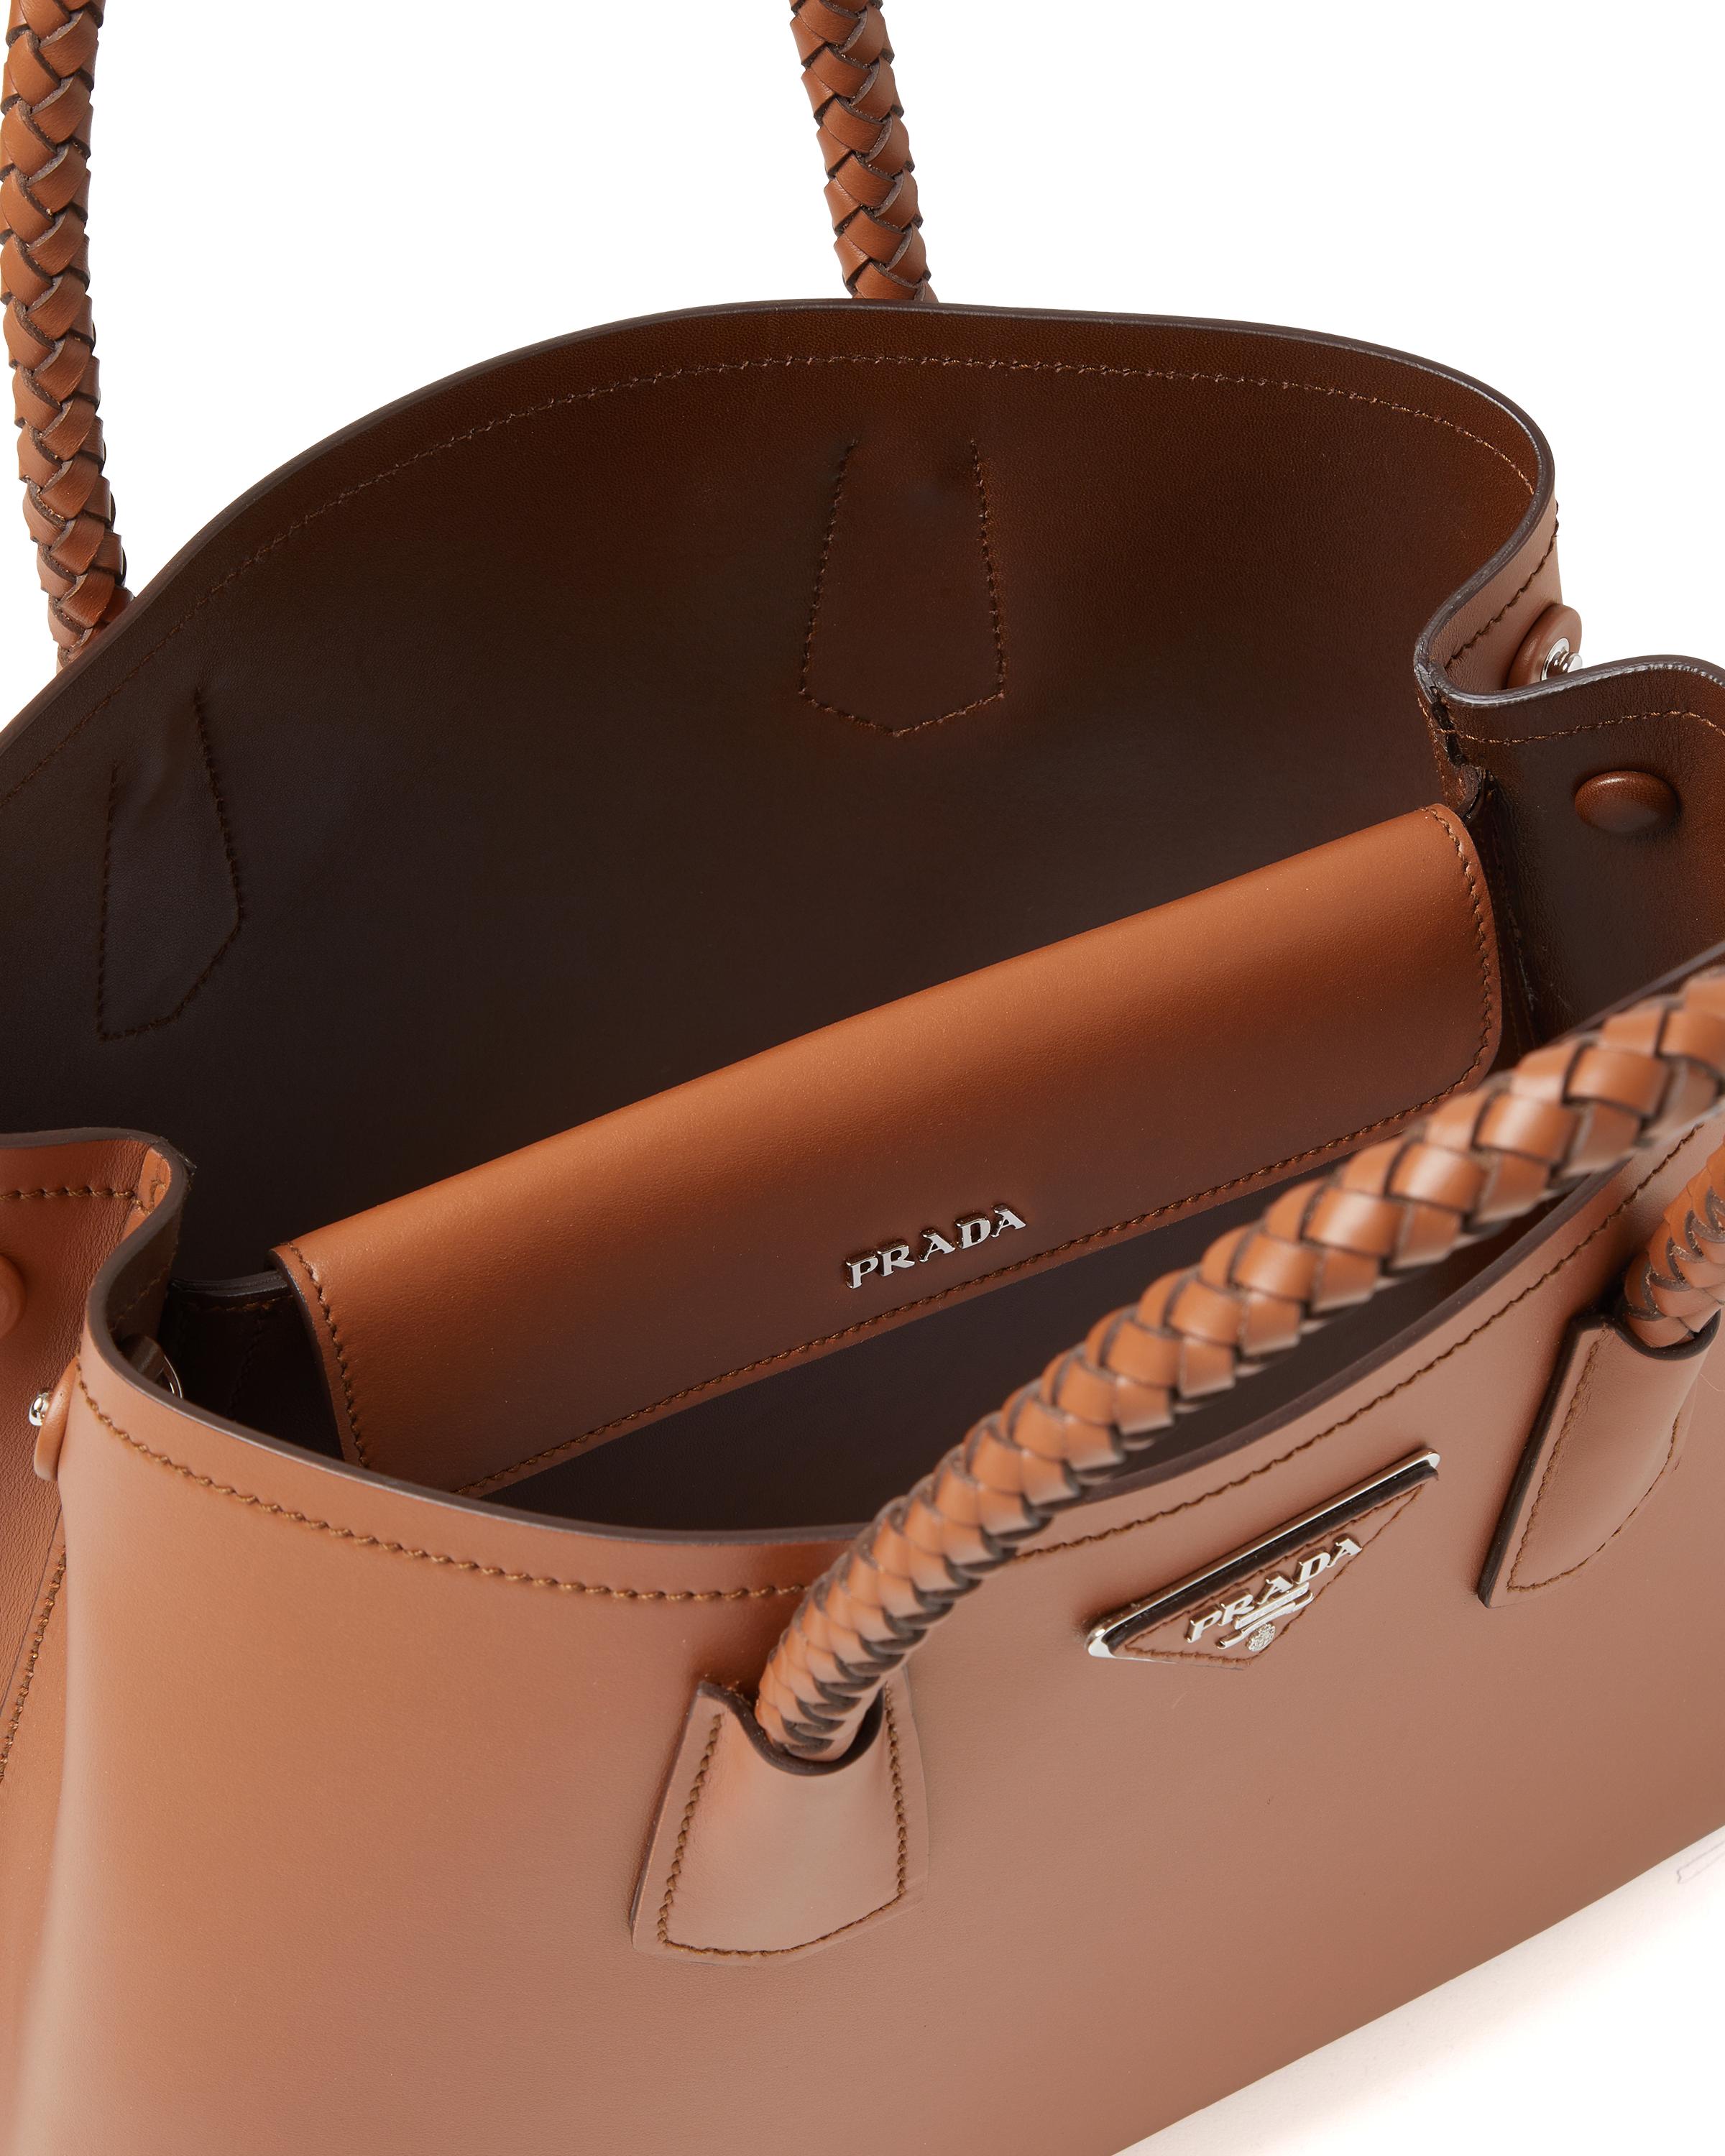 Prada Double Medium Leather Handbag in Cognac/Crocodile (Brown) - Lyst